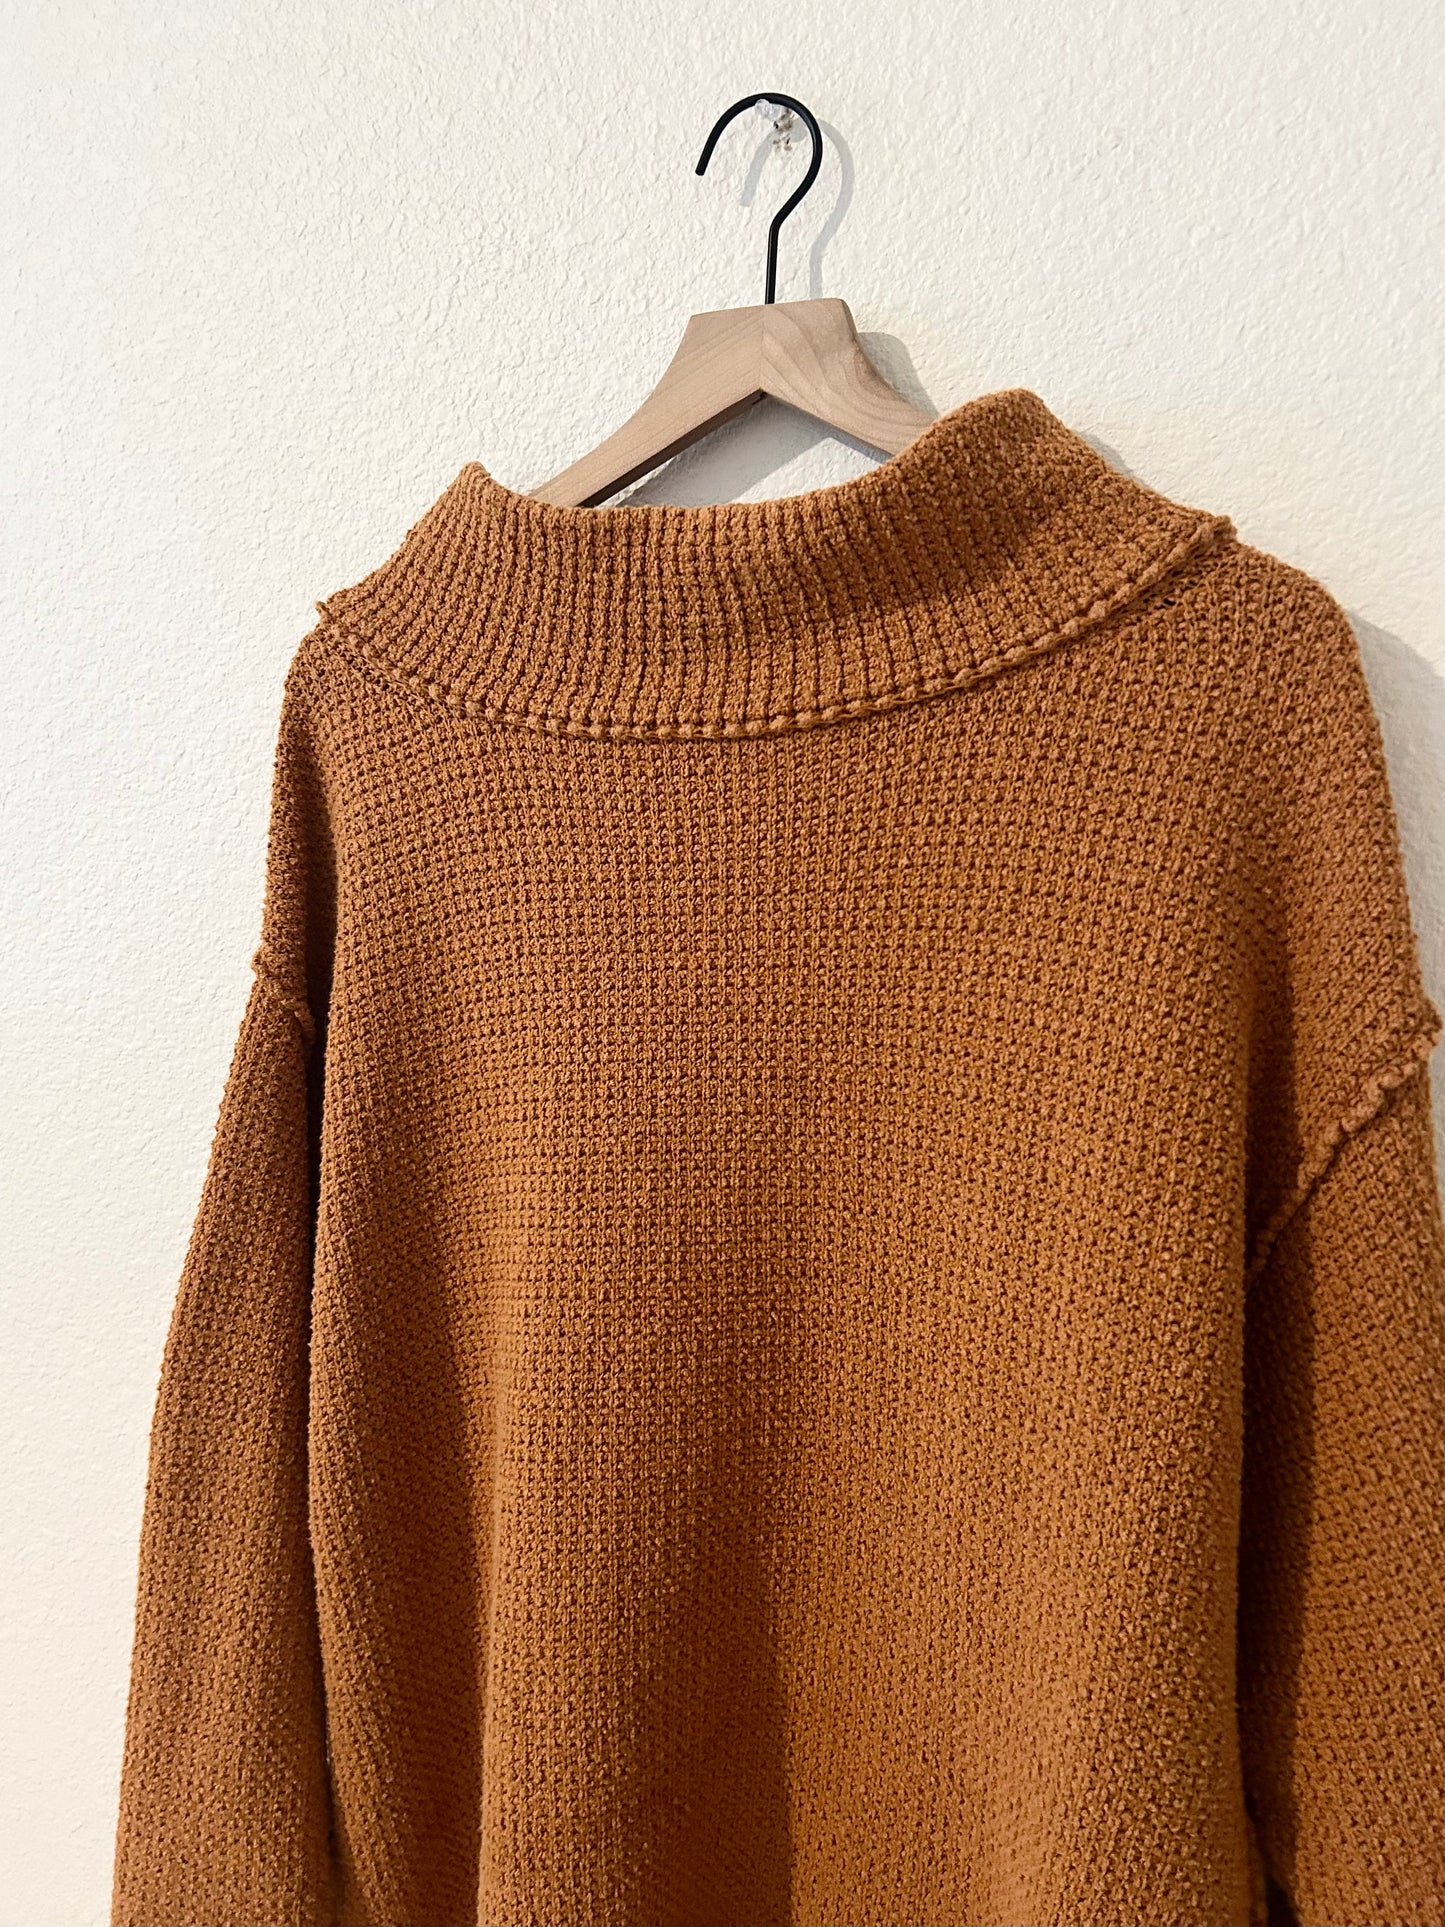 Free People Mock Neck Orange Sweater (M)